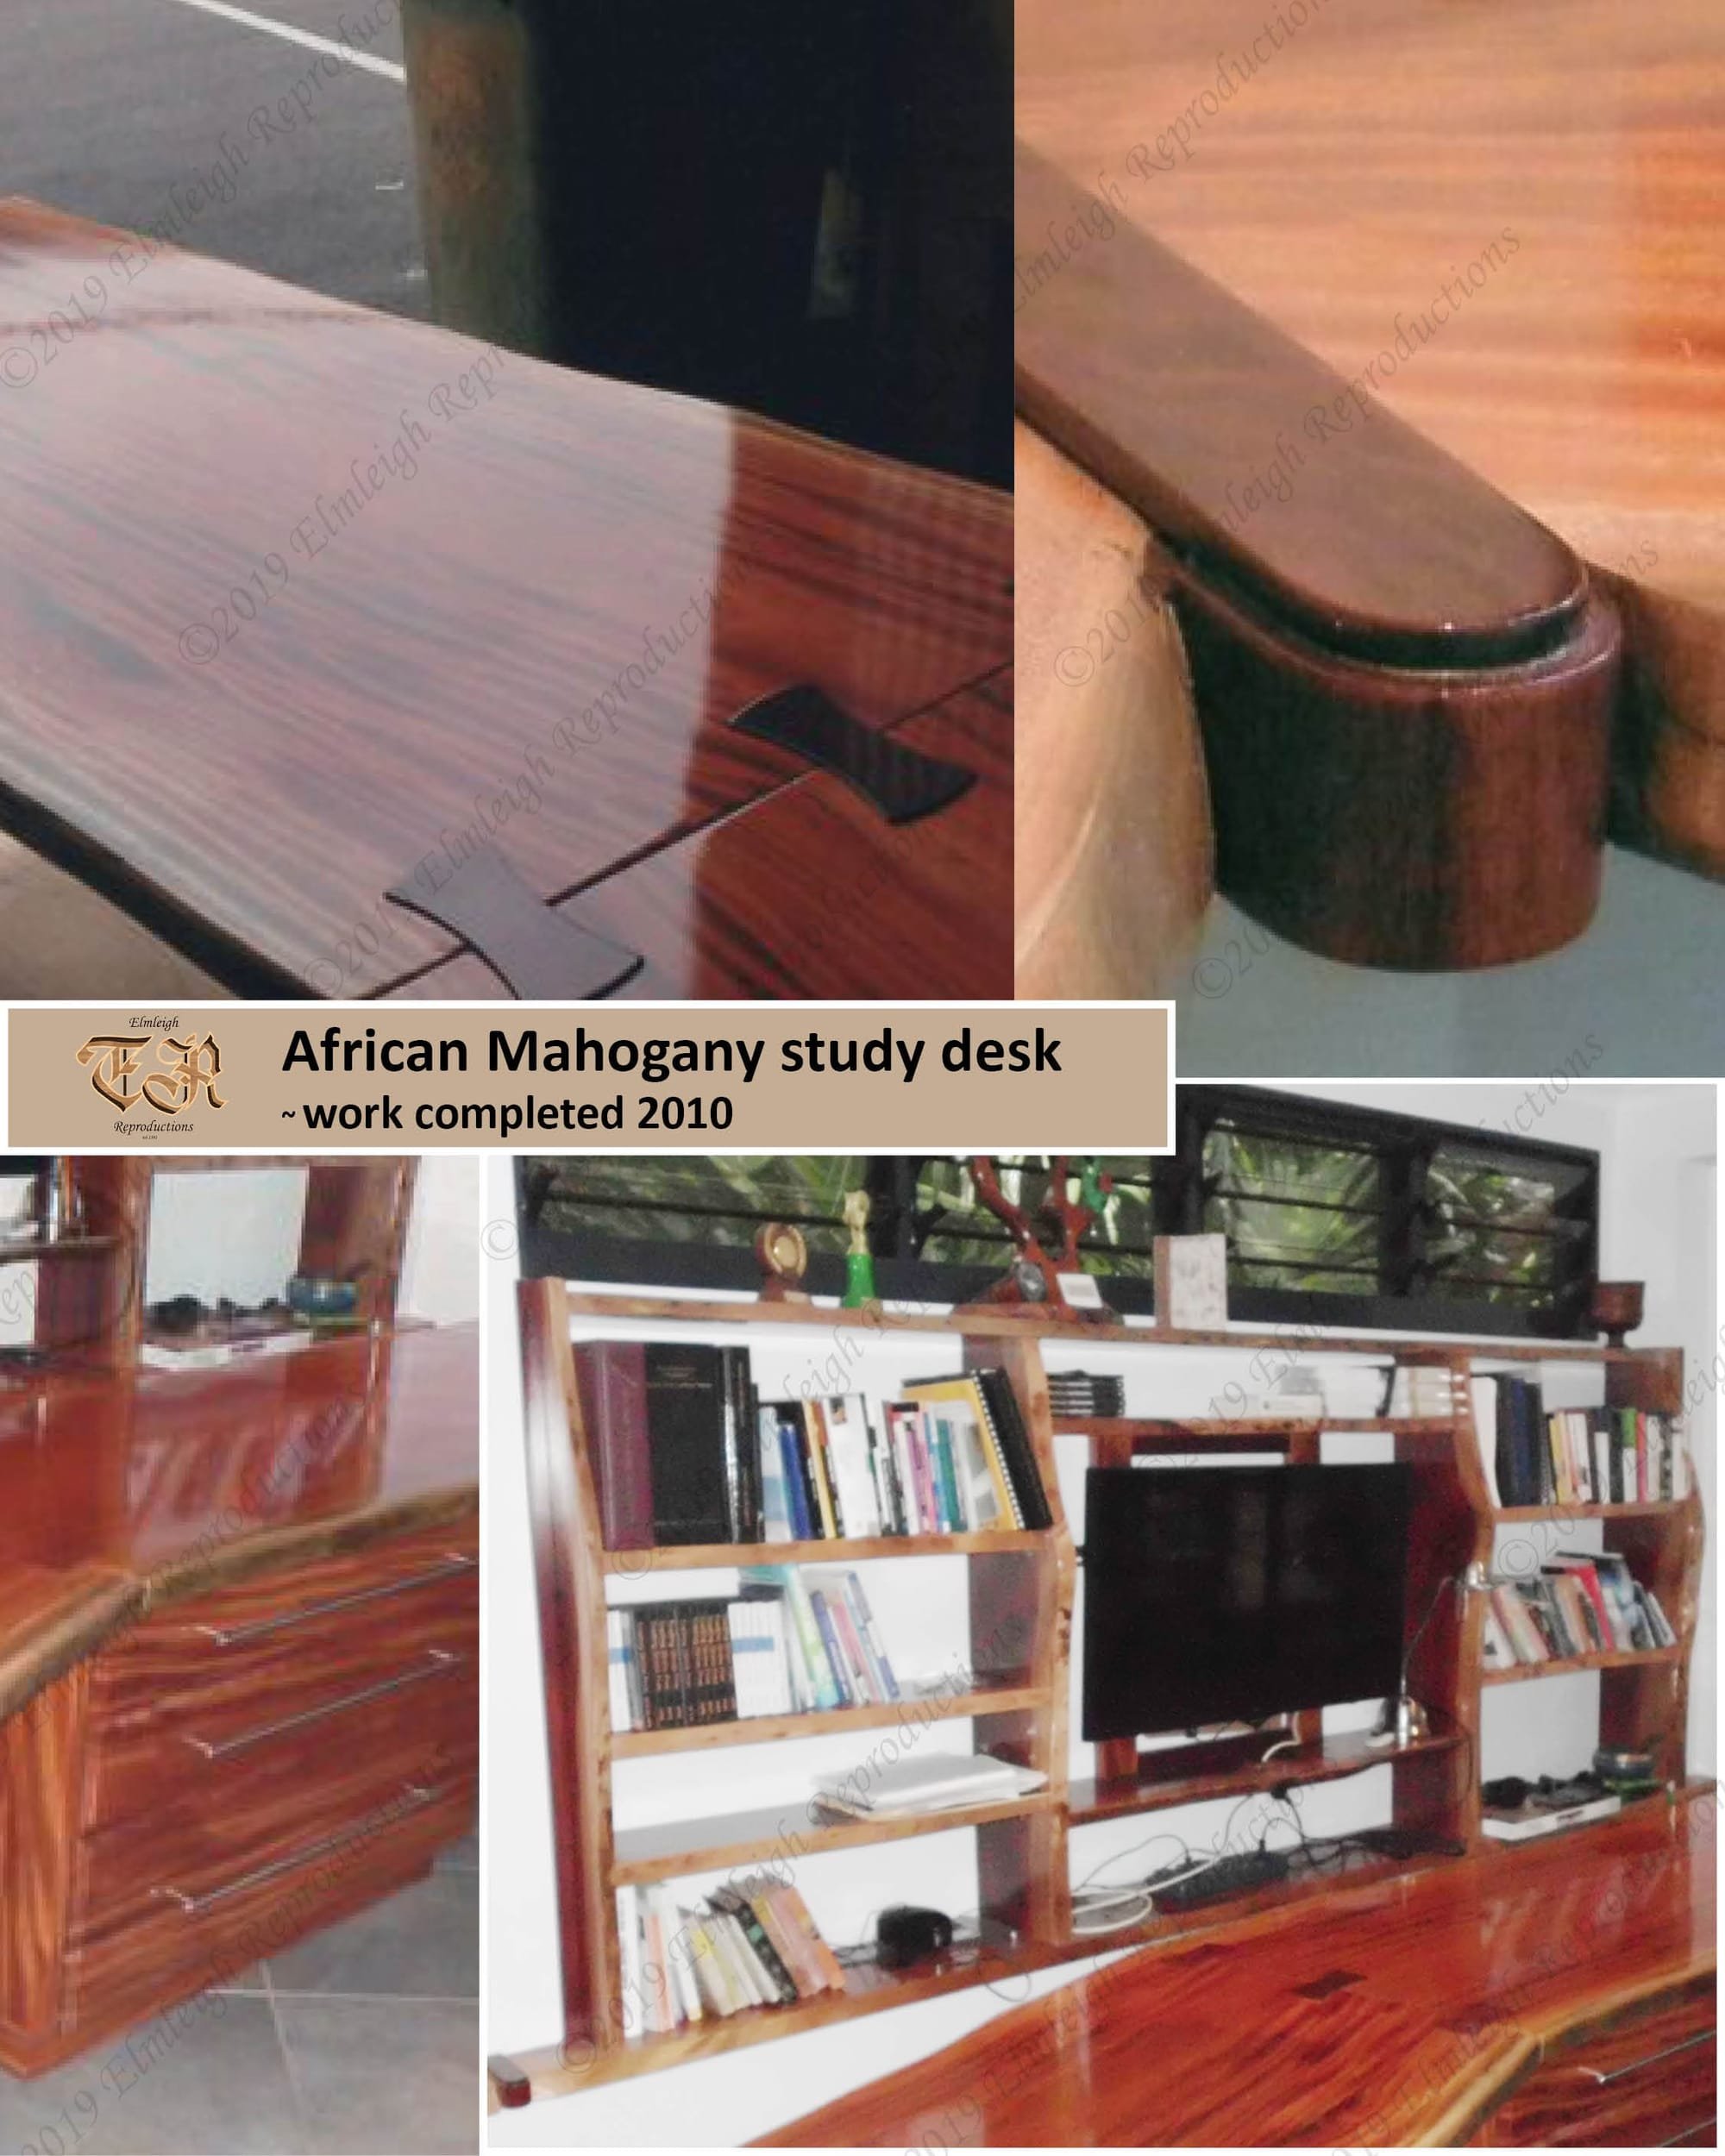 African Mahogany study desk